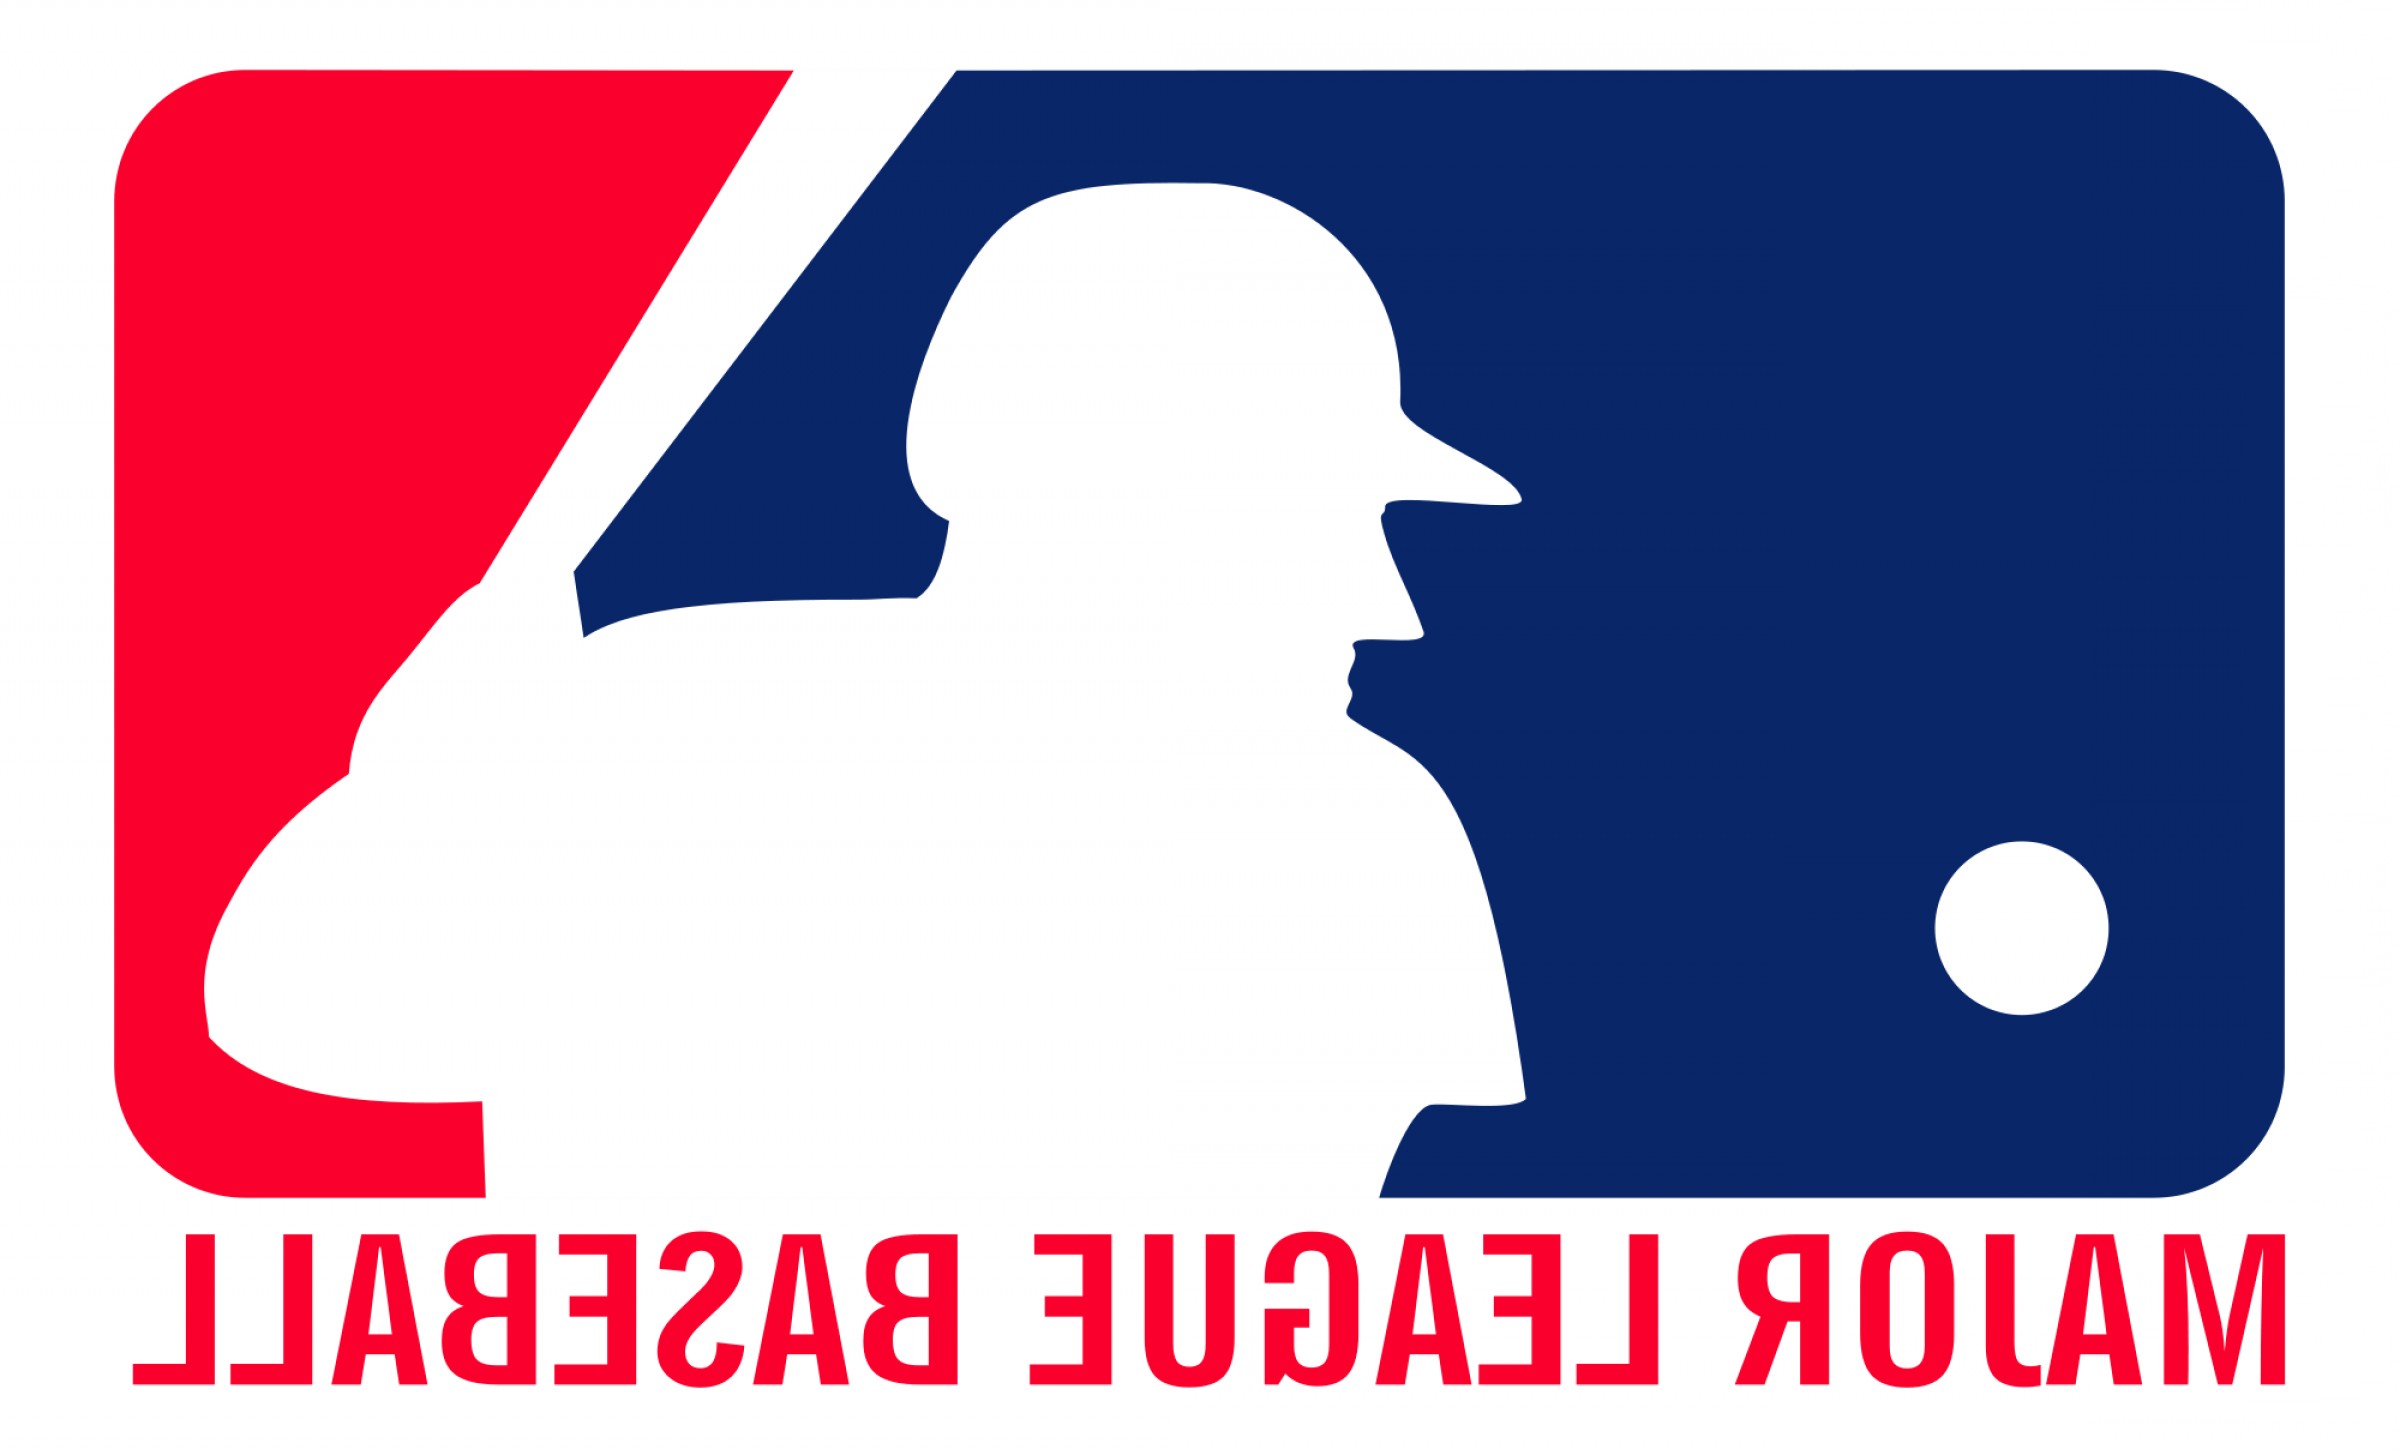 Baseball Team Logos Clip Art Hd Picture | Piclipart